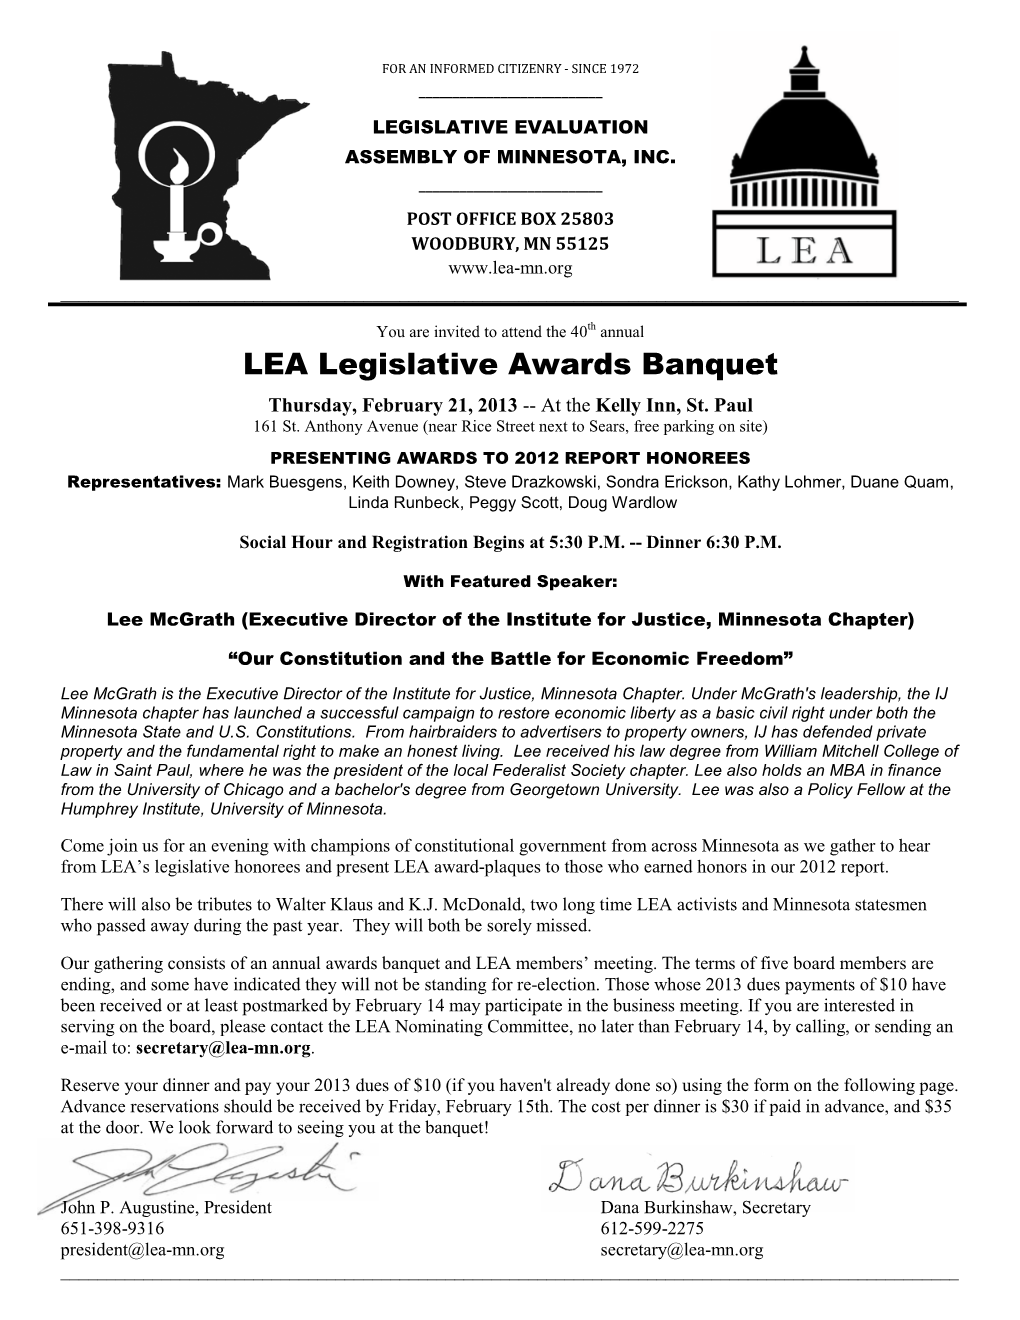 LEA Legislative Awards Banquet Thursday, February 21, 2013 -- at the Kelly Inn, St